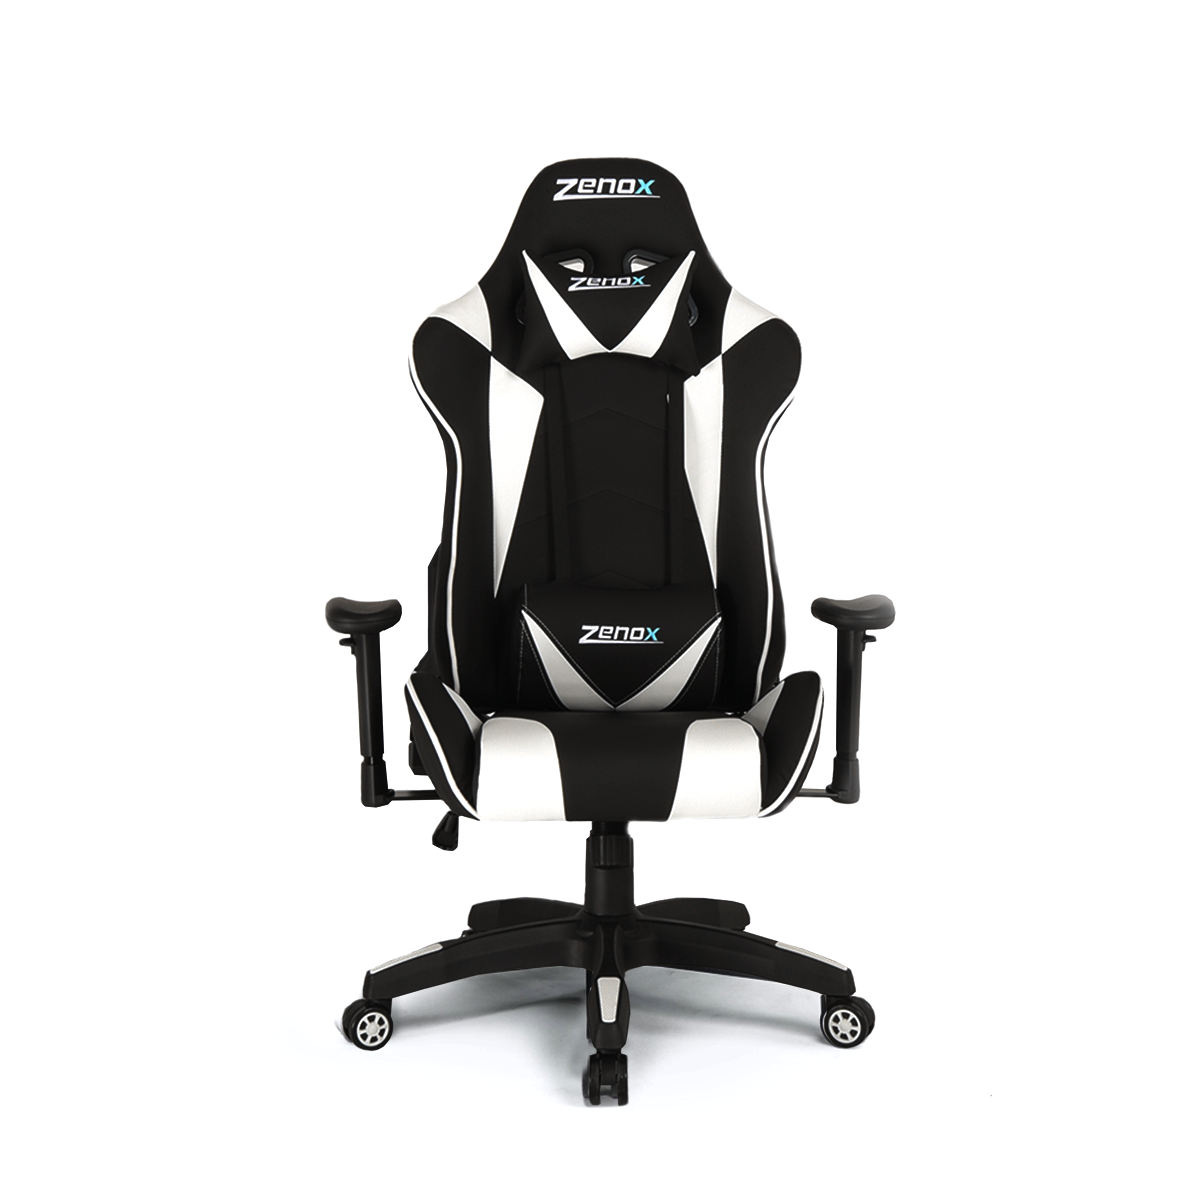 Zenox Saturn Series Racing Chair 電競椅 - White 白色